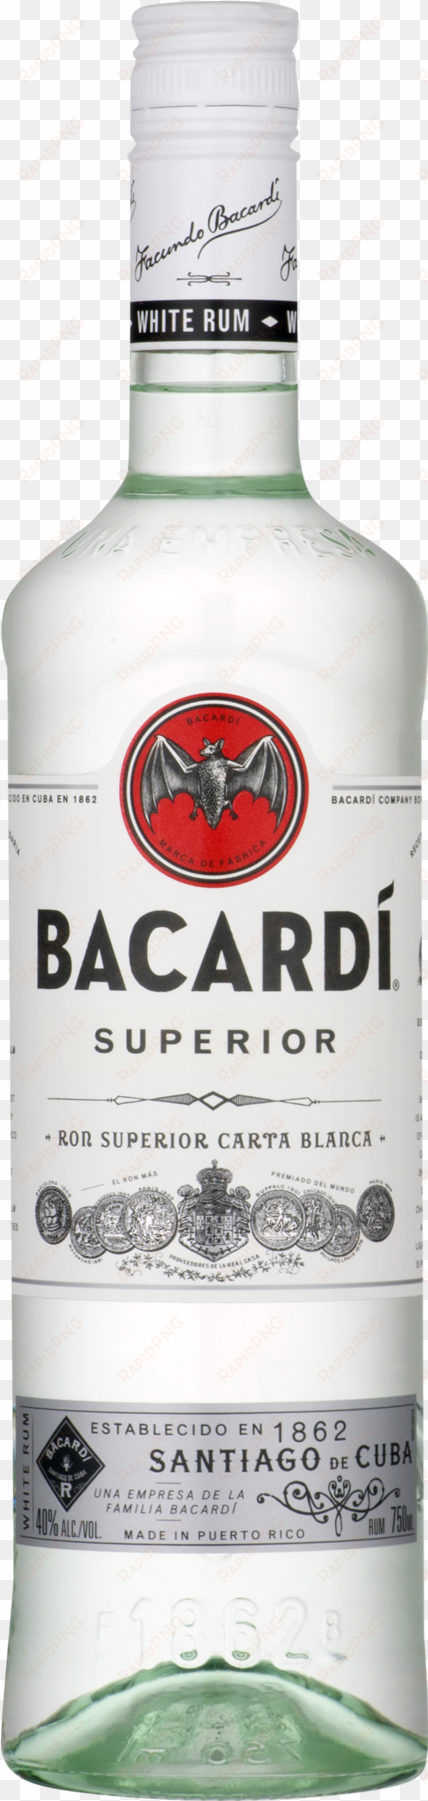 bacardi carta blanca - 1980s white rum